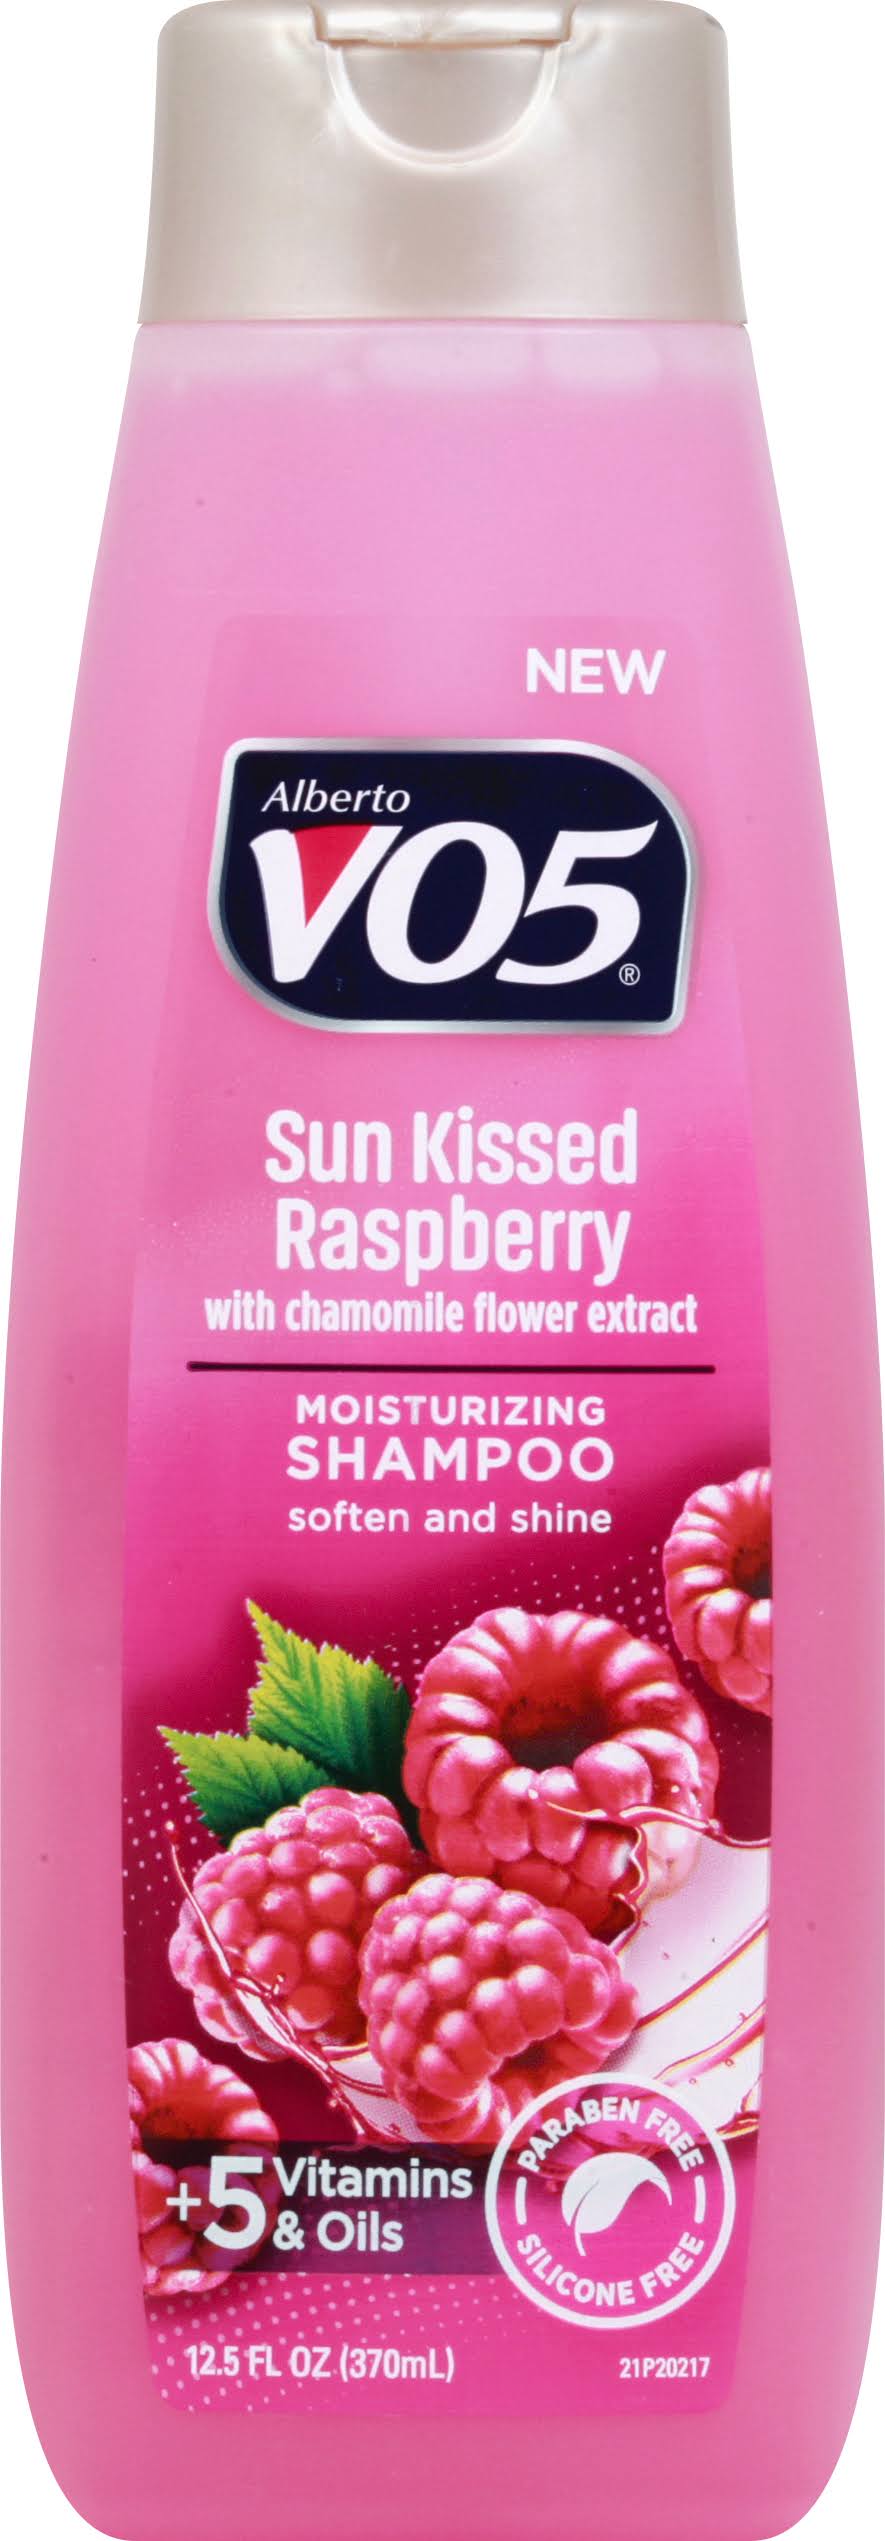 Alberto Vo5 Herbal Escapes Balancing Shampoo - Sun Kissed Raspberry, 370ml